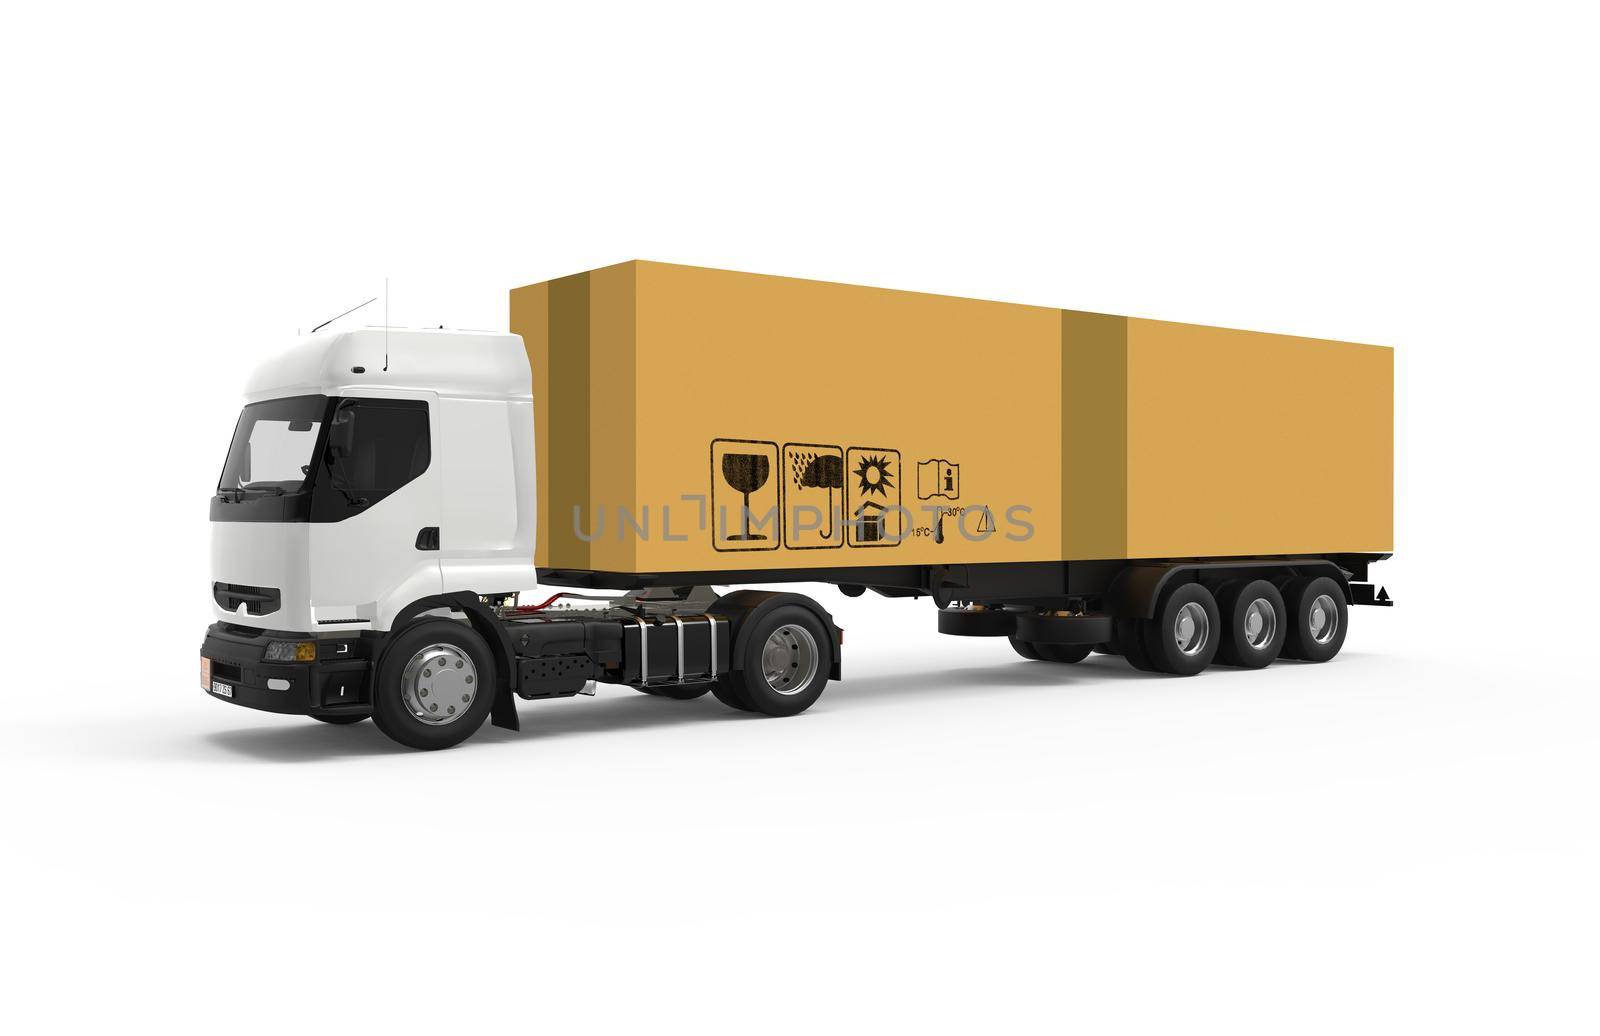 Truck transport a big cardboard box isolated